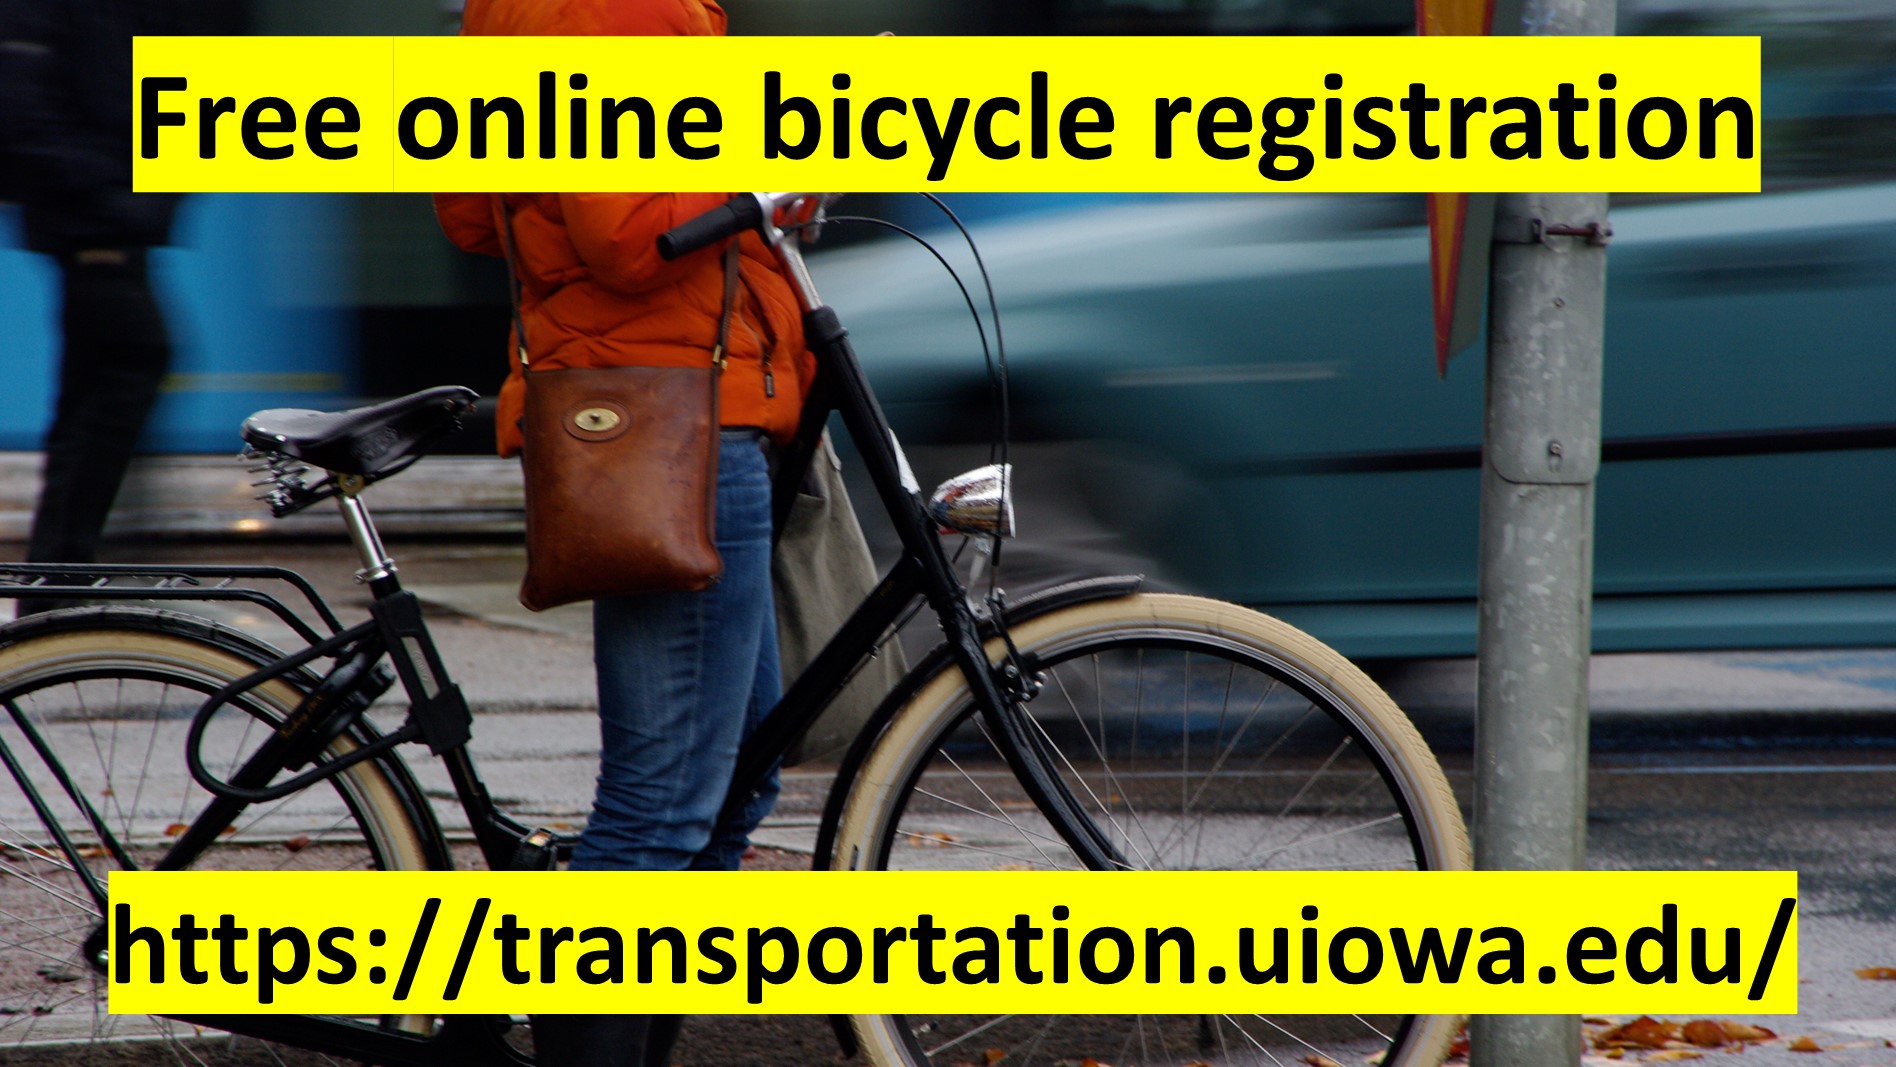 Free online bicycle registration at transportation.uiowa.edu